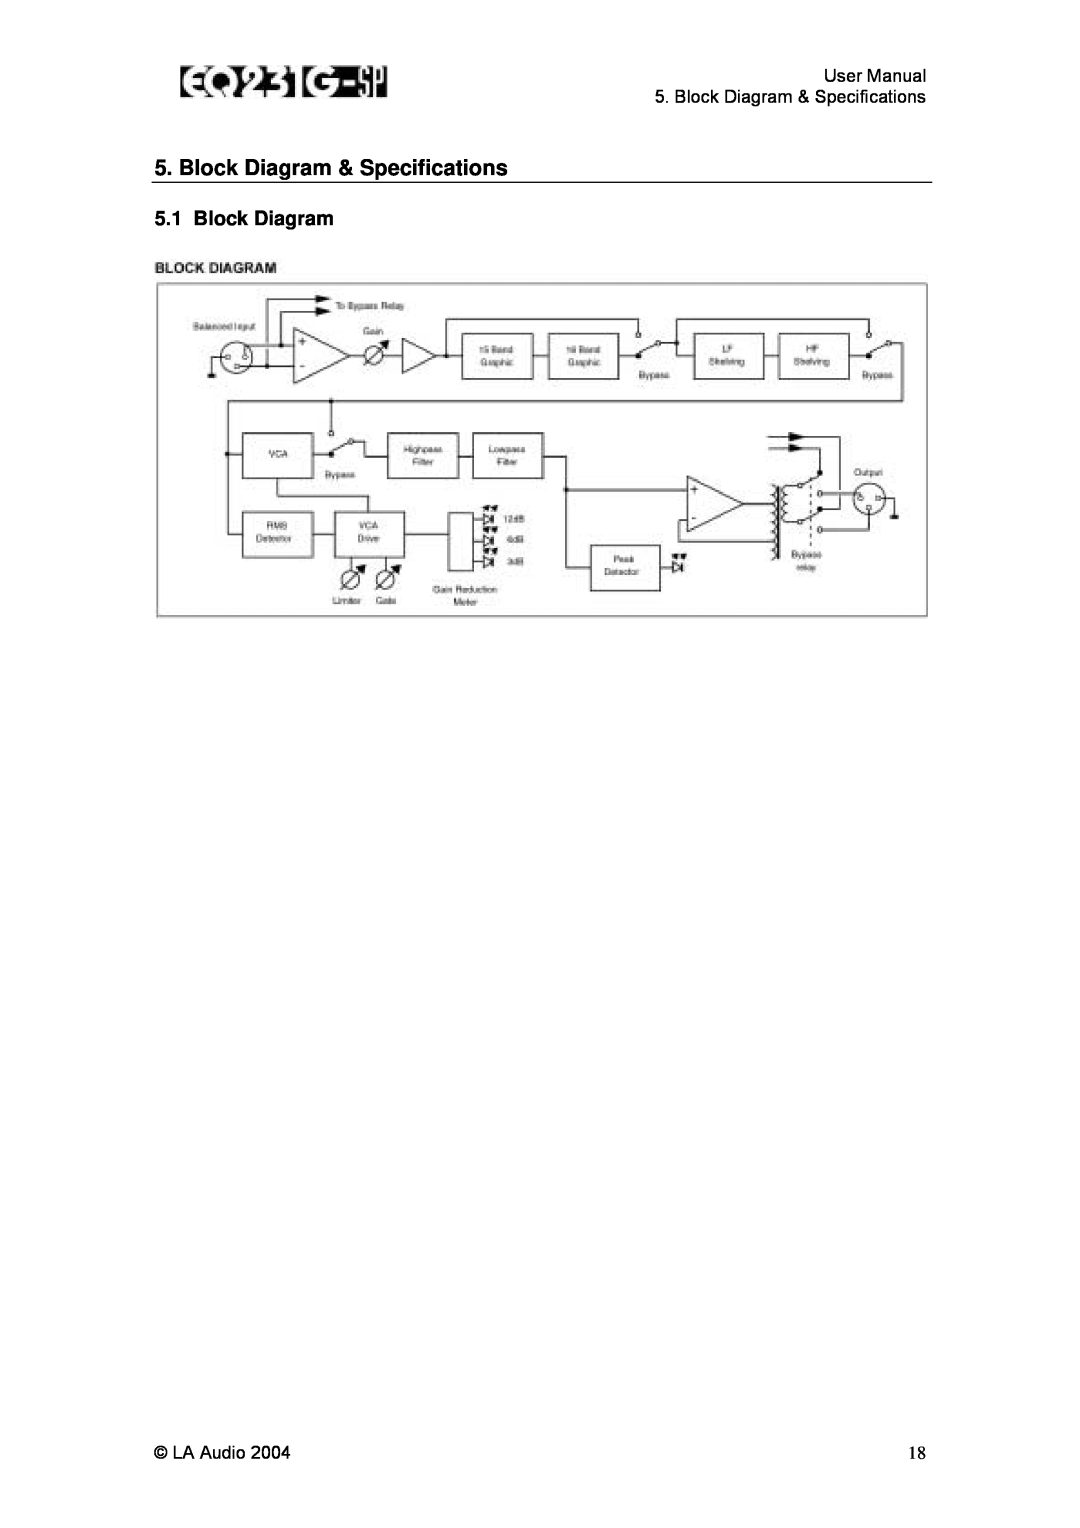 LA Audio Electronic EQ231G-SP user manual Block Diagram & Specifications, LA Audio 